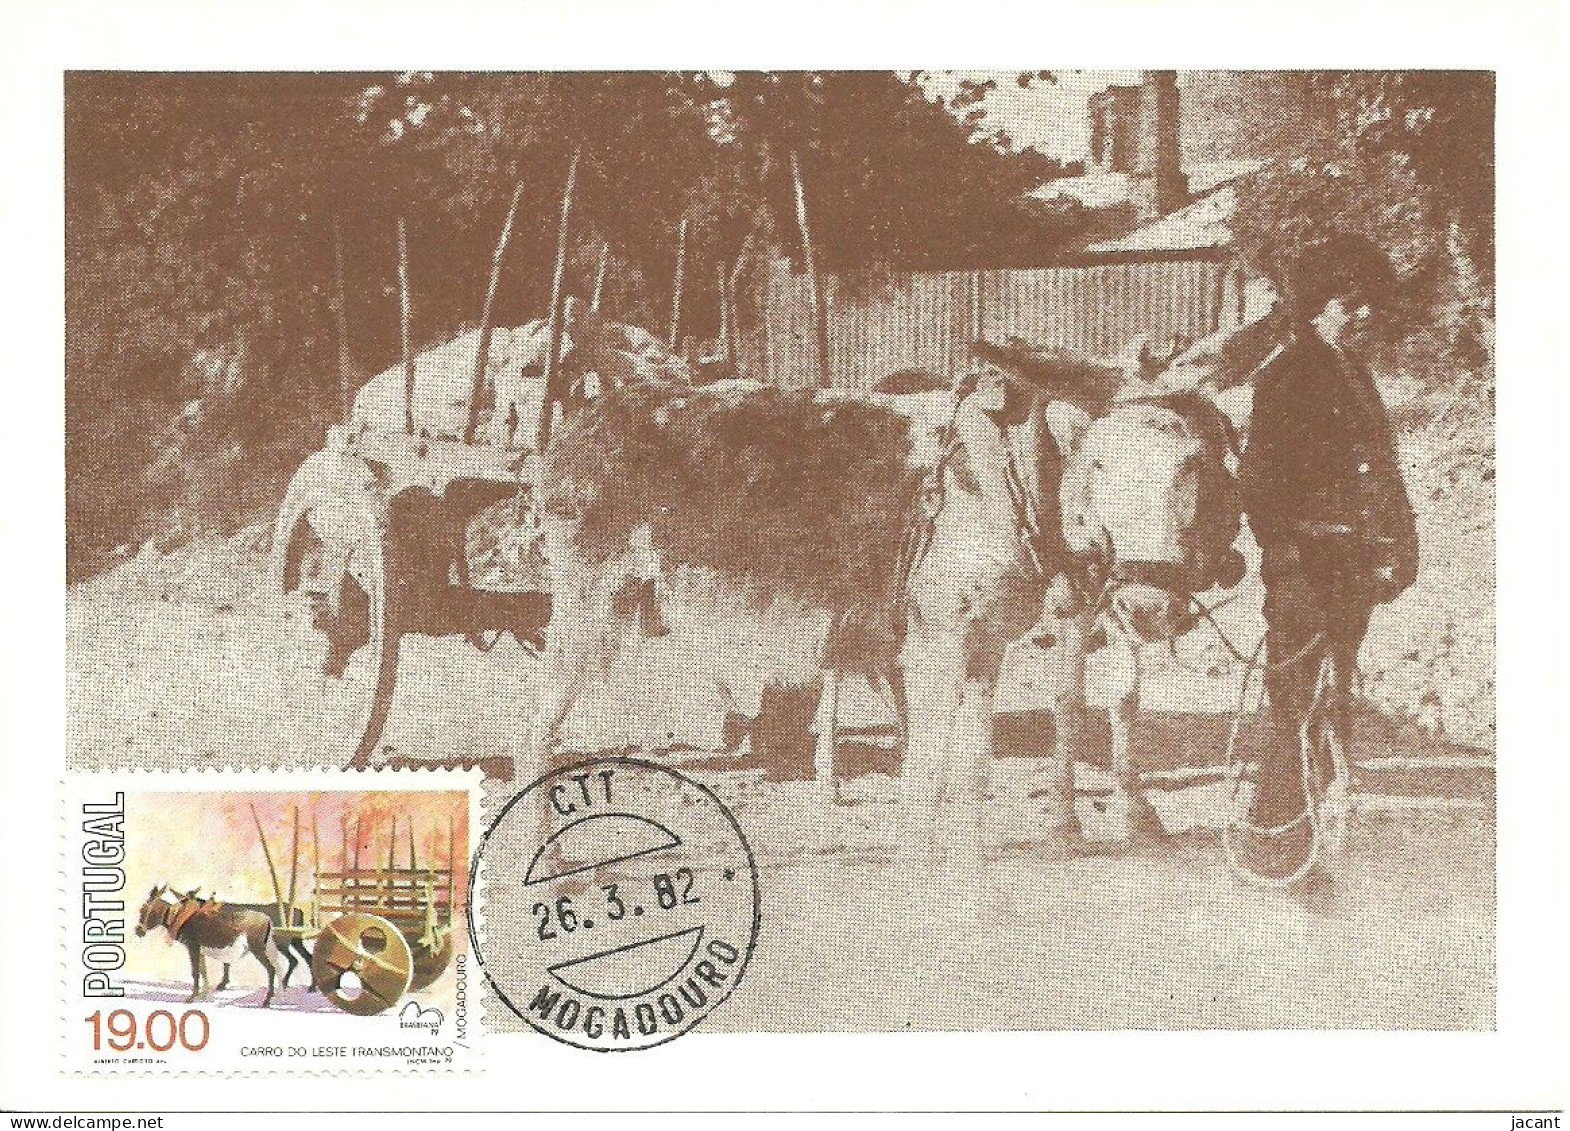 30840 - Carte Maximum - Portugal -  Lubrapex Carro Leste Transmontano Burros - Chars à ânes - Donkey Cart - Maximumkarten (MC)